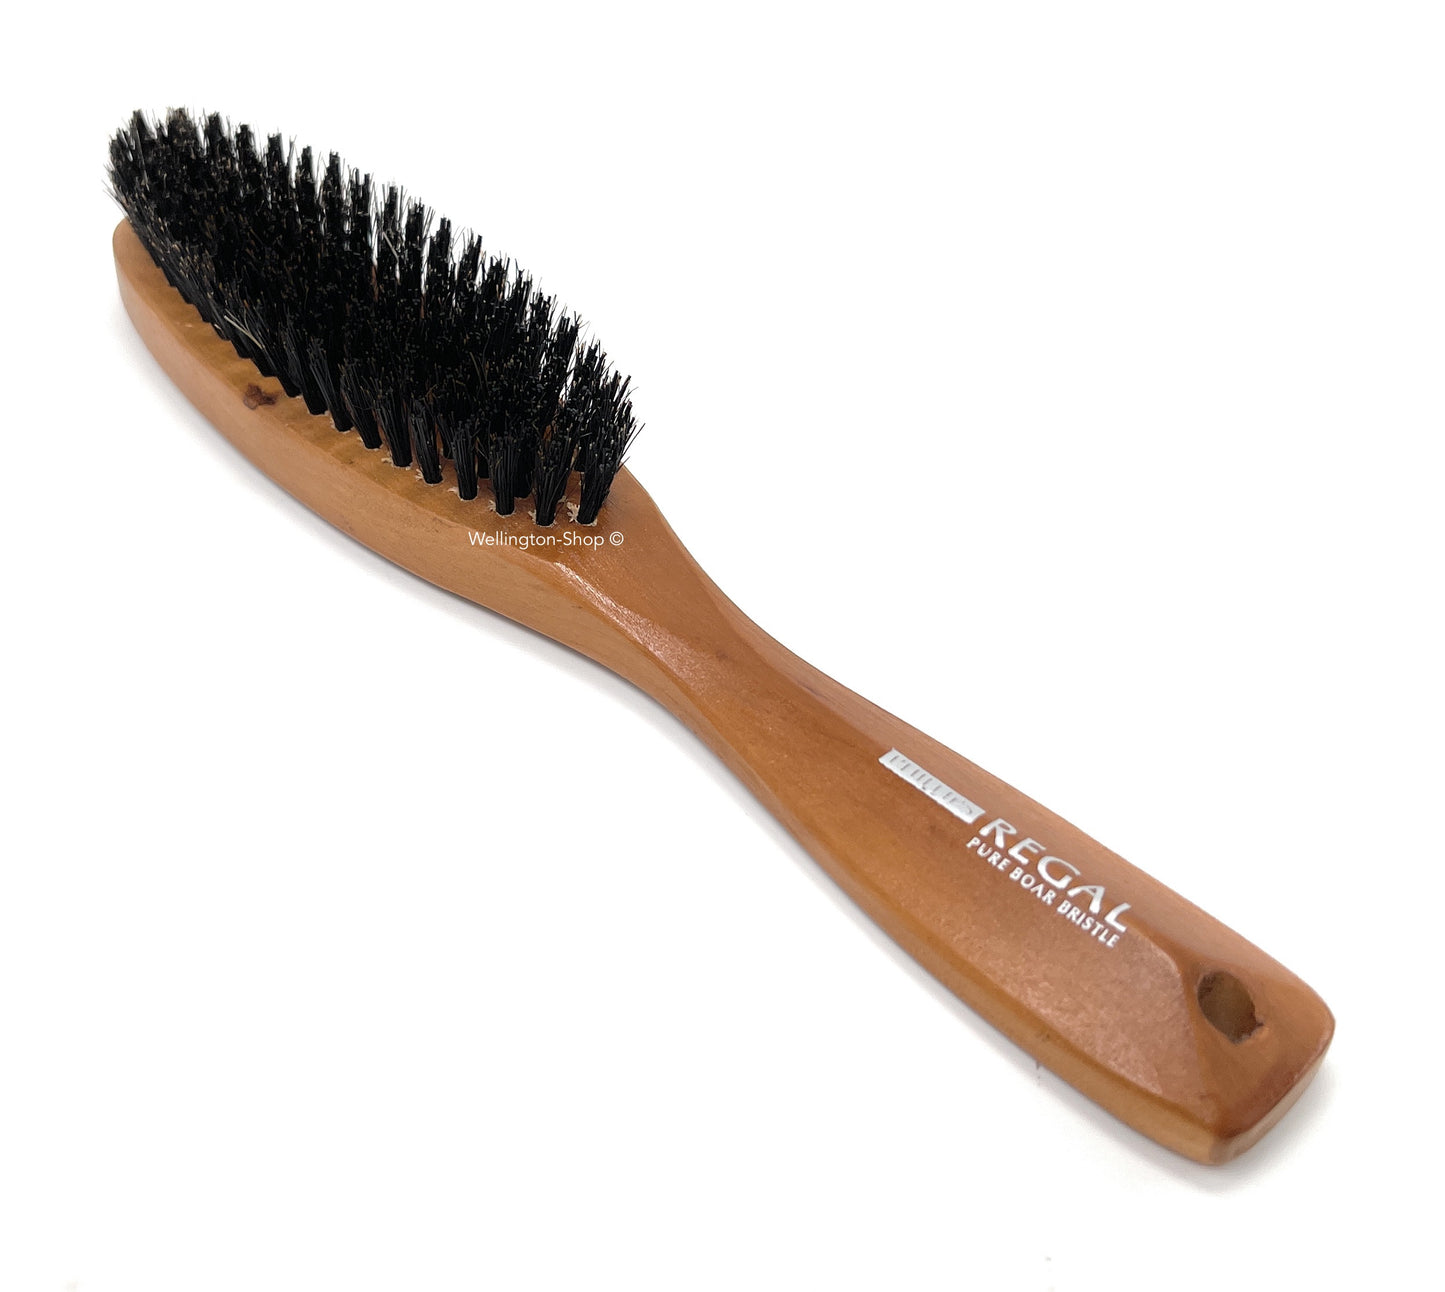 Phillips Brush Regal 8.5 In. Pure Boar Bristle Hair Brush Hairbrush 5 Rows The Best Gift